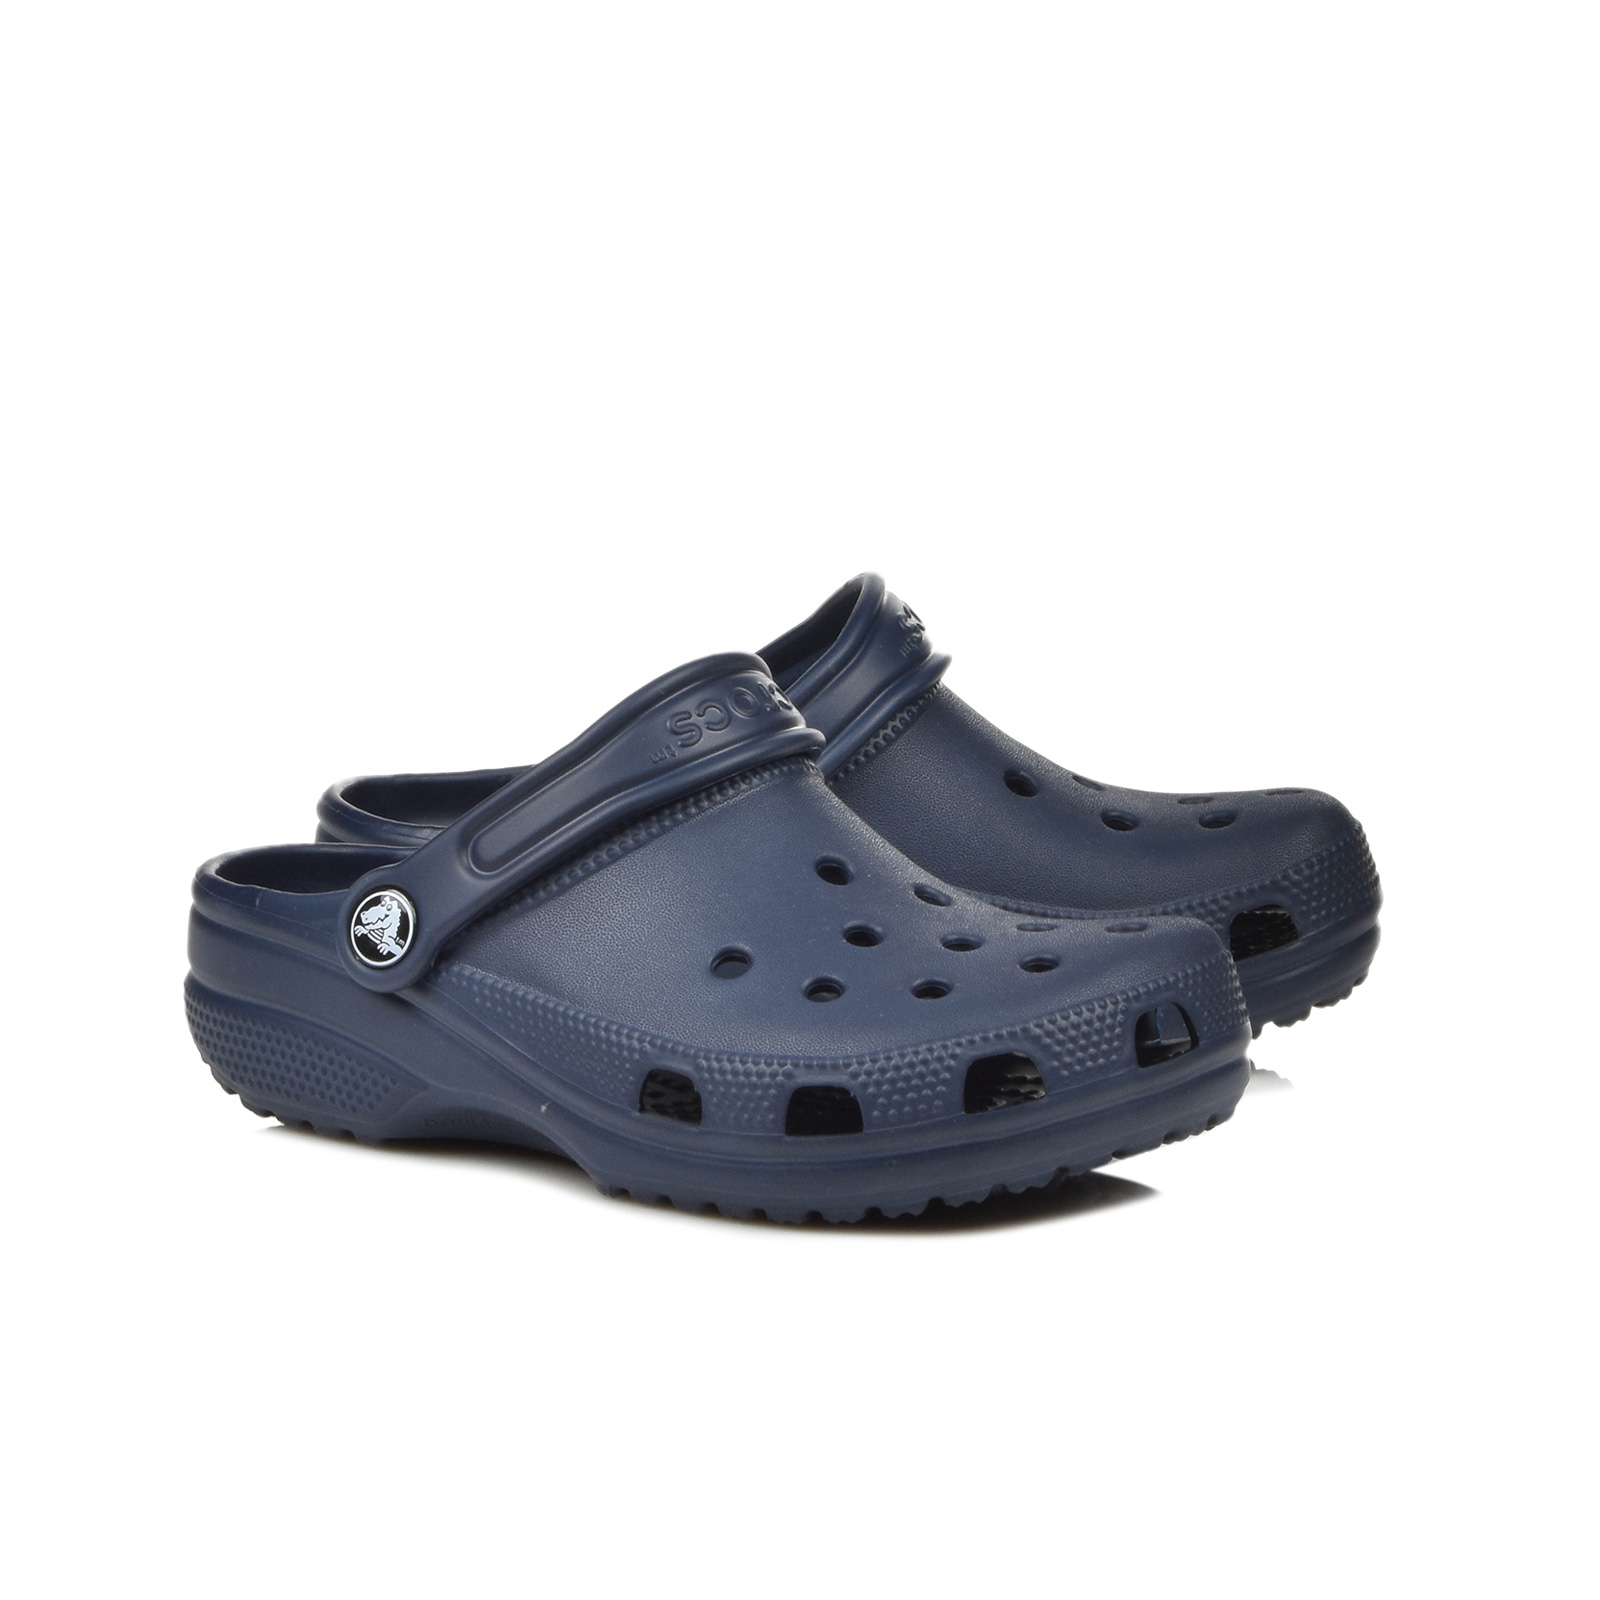 Crocs - CLASSIC CLOG K - NAVY Παιδικά > Παπούτσια > Clogs > Glogs